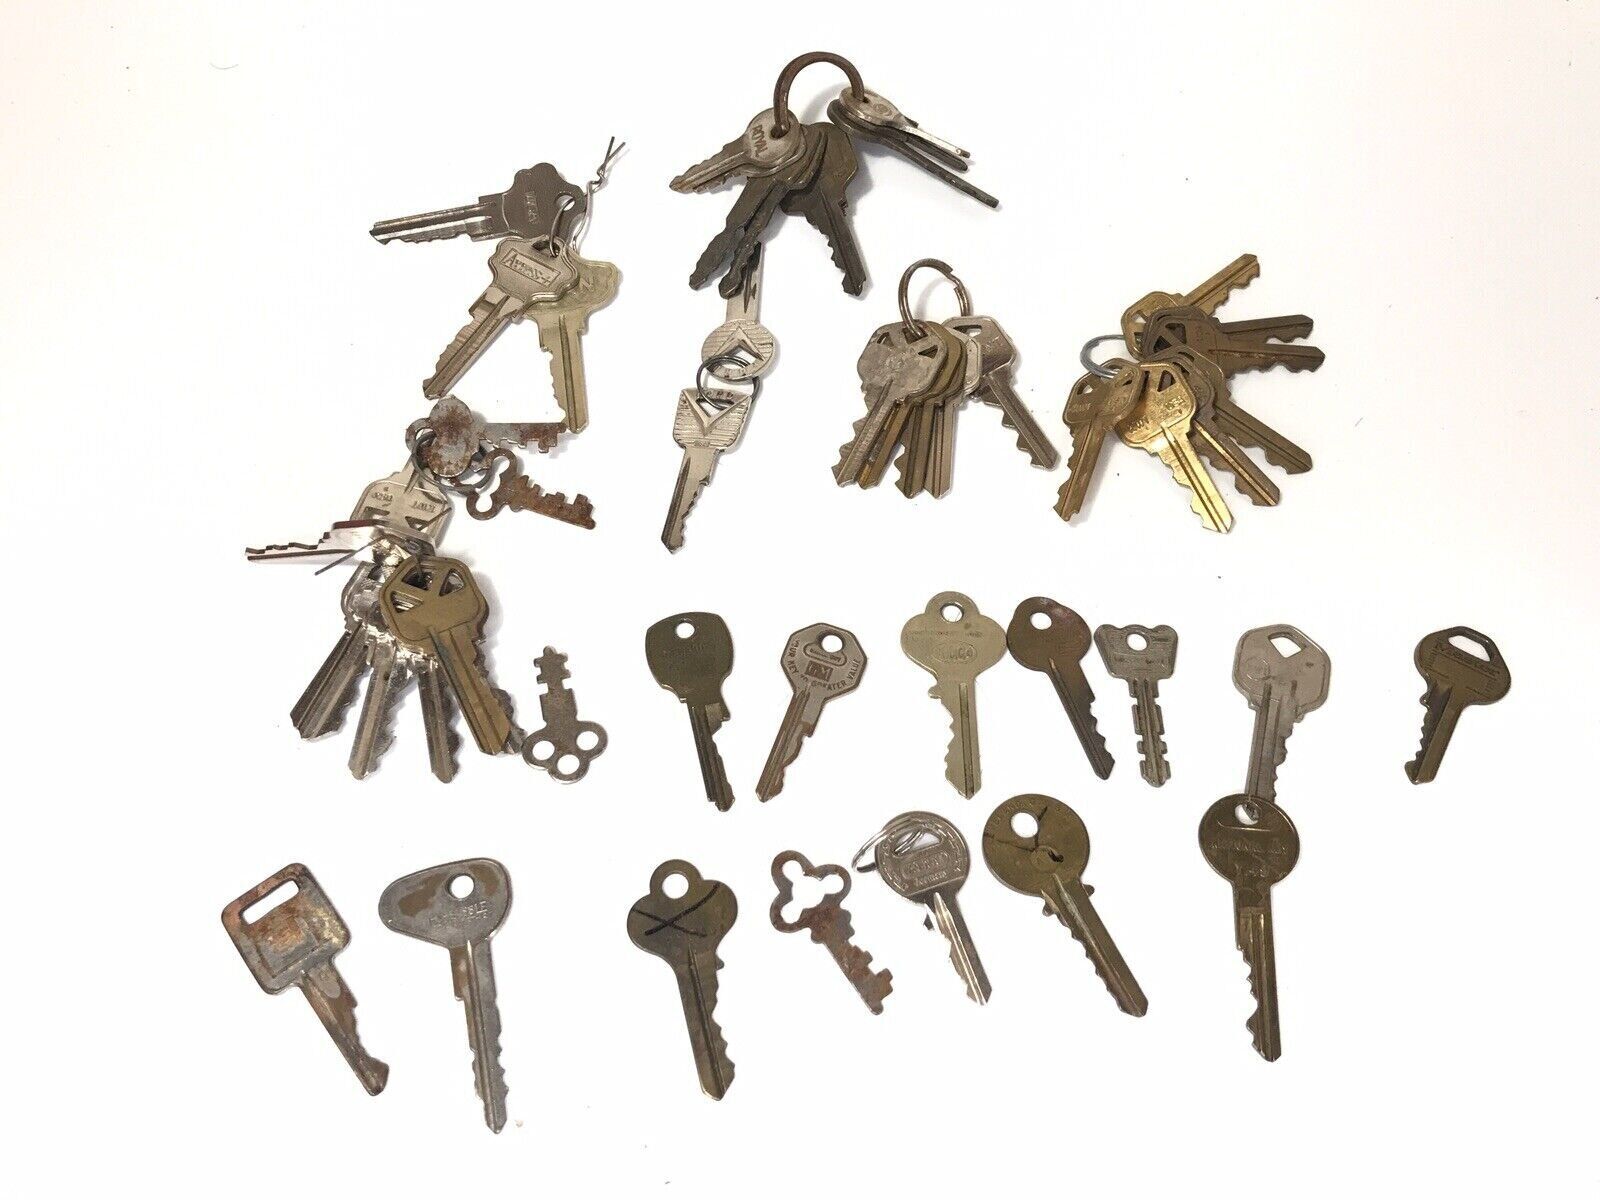 LOT OF 52 Vintage Auto Advertising Keys King Rings Key Chains